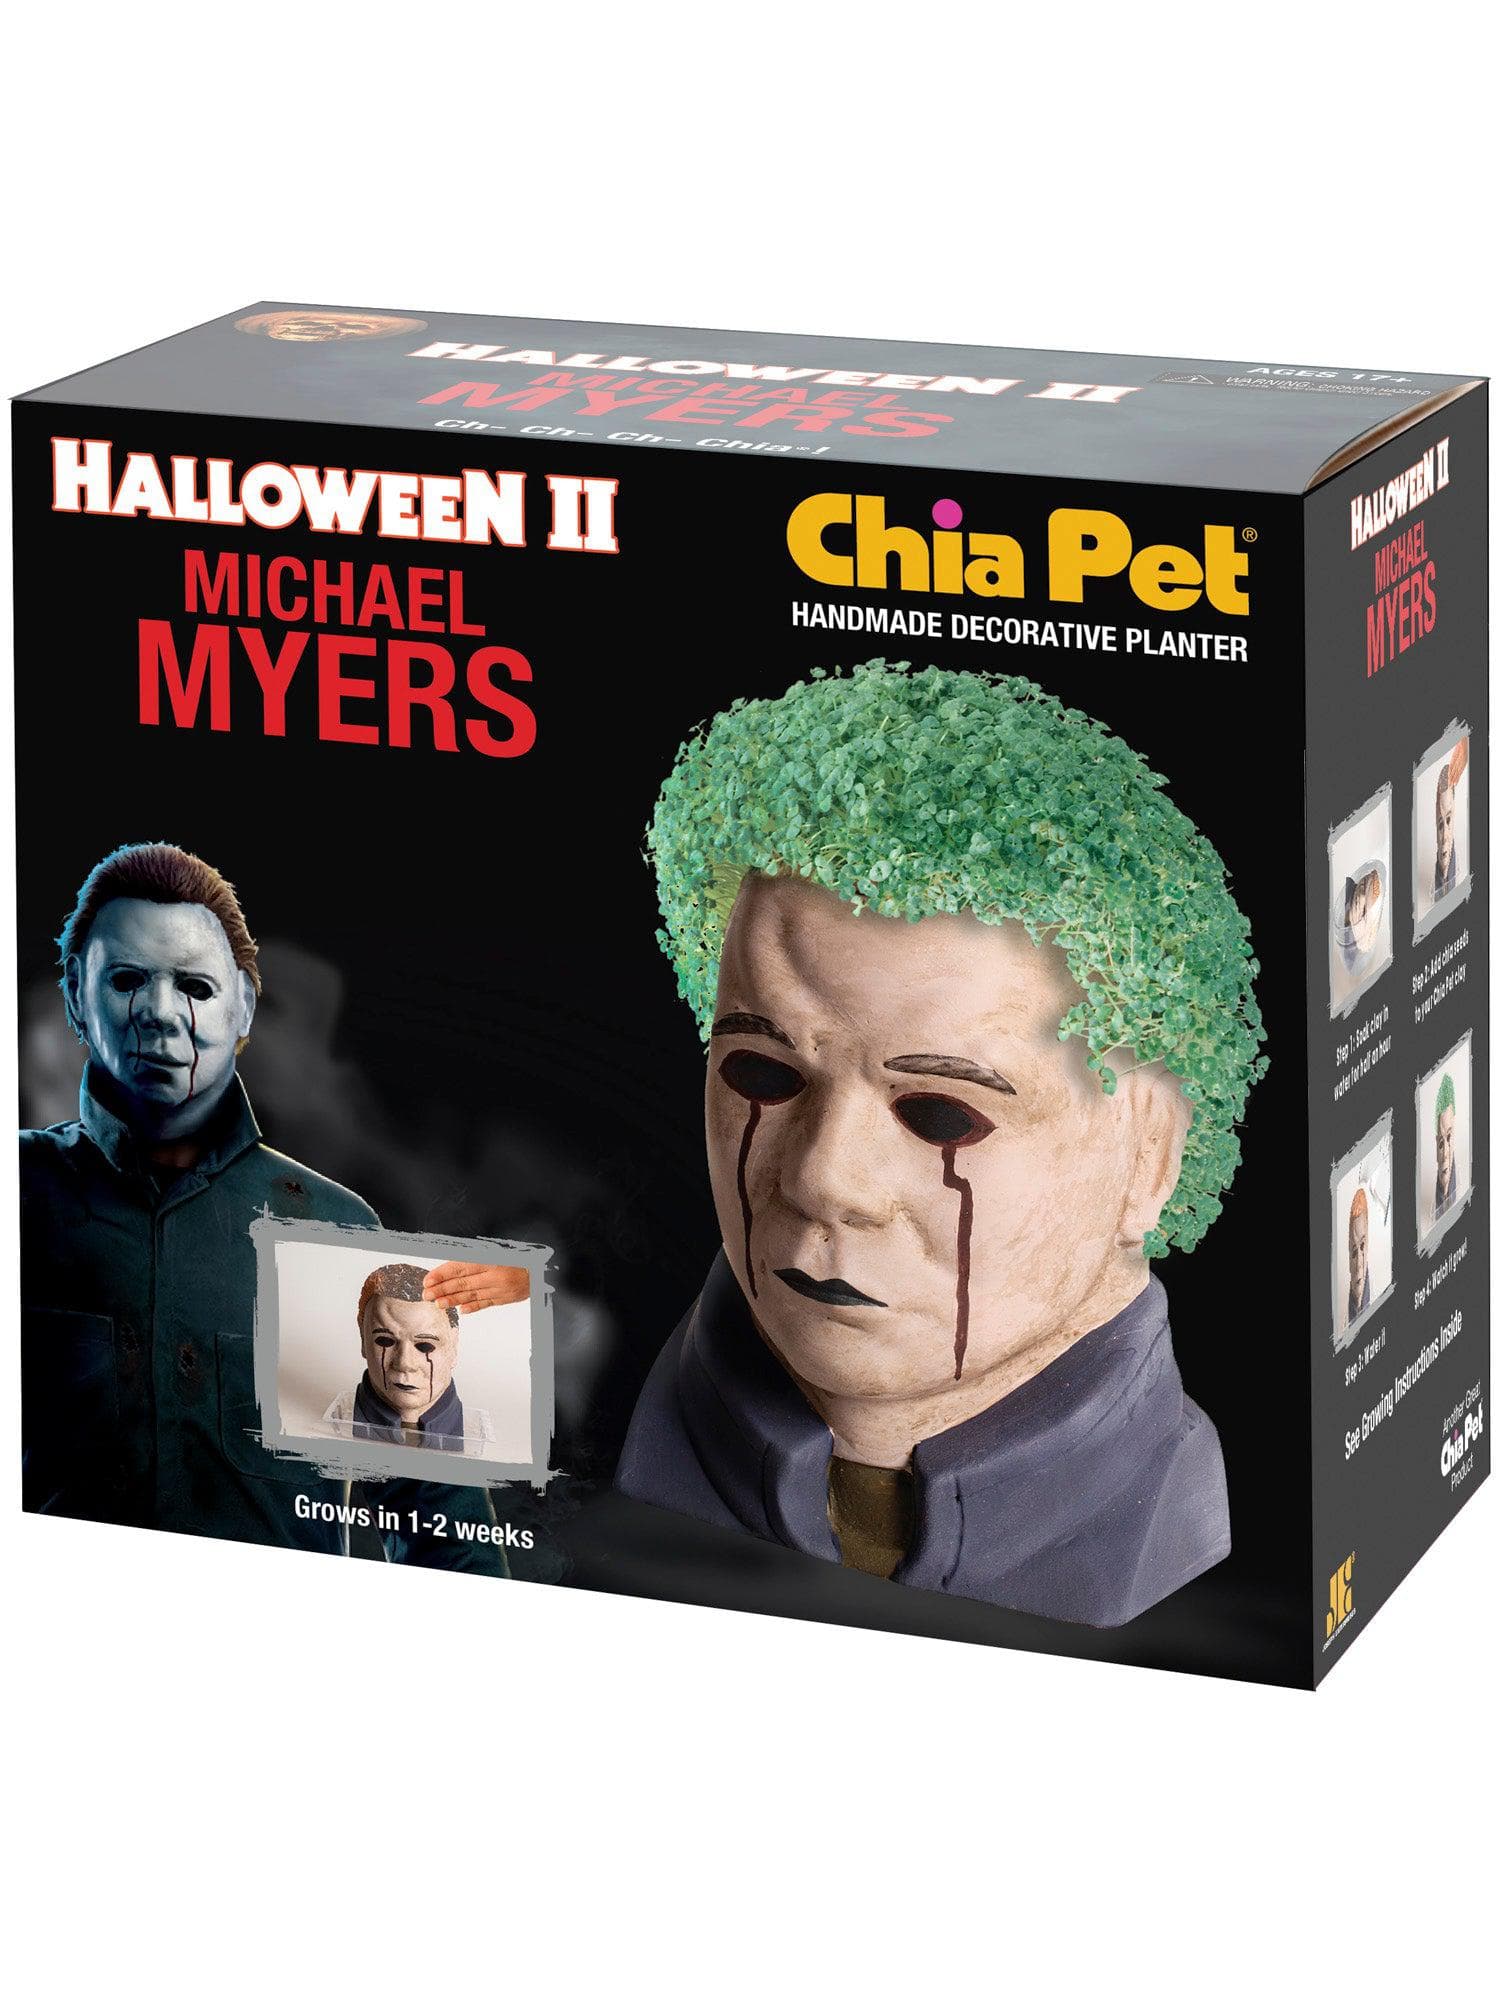 Chia Pet - Michael Myers (Halloween) - Decorative Planter - costumes.com